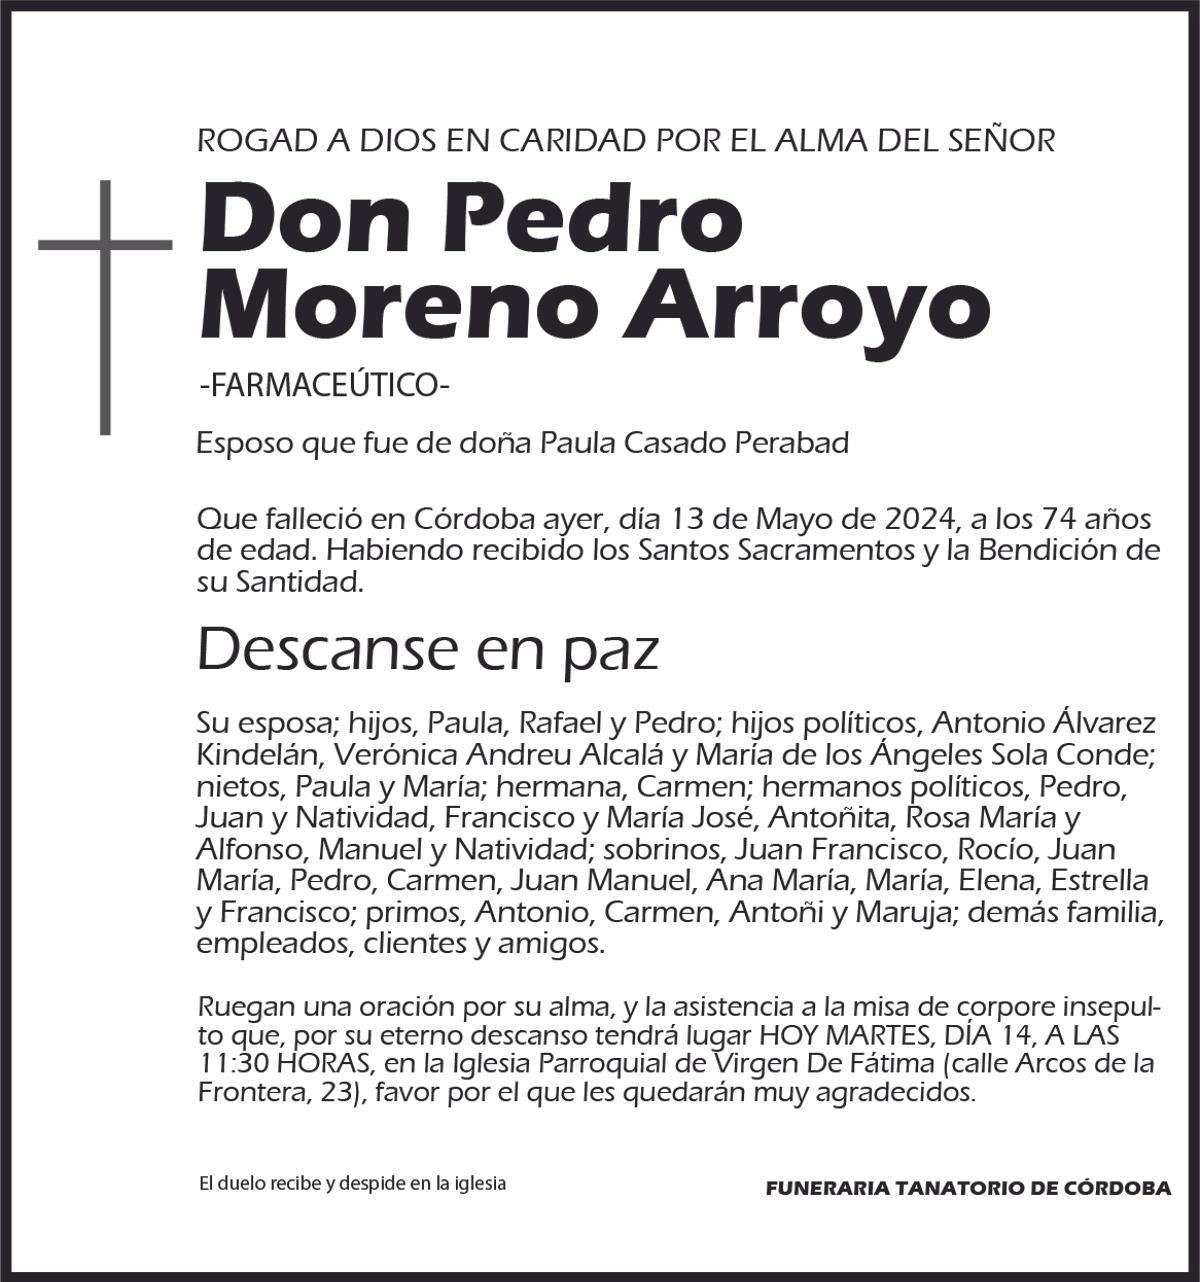 Pedro Moreno Arroyo